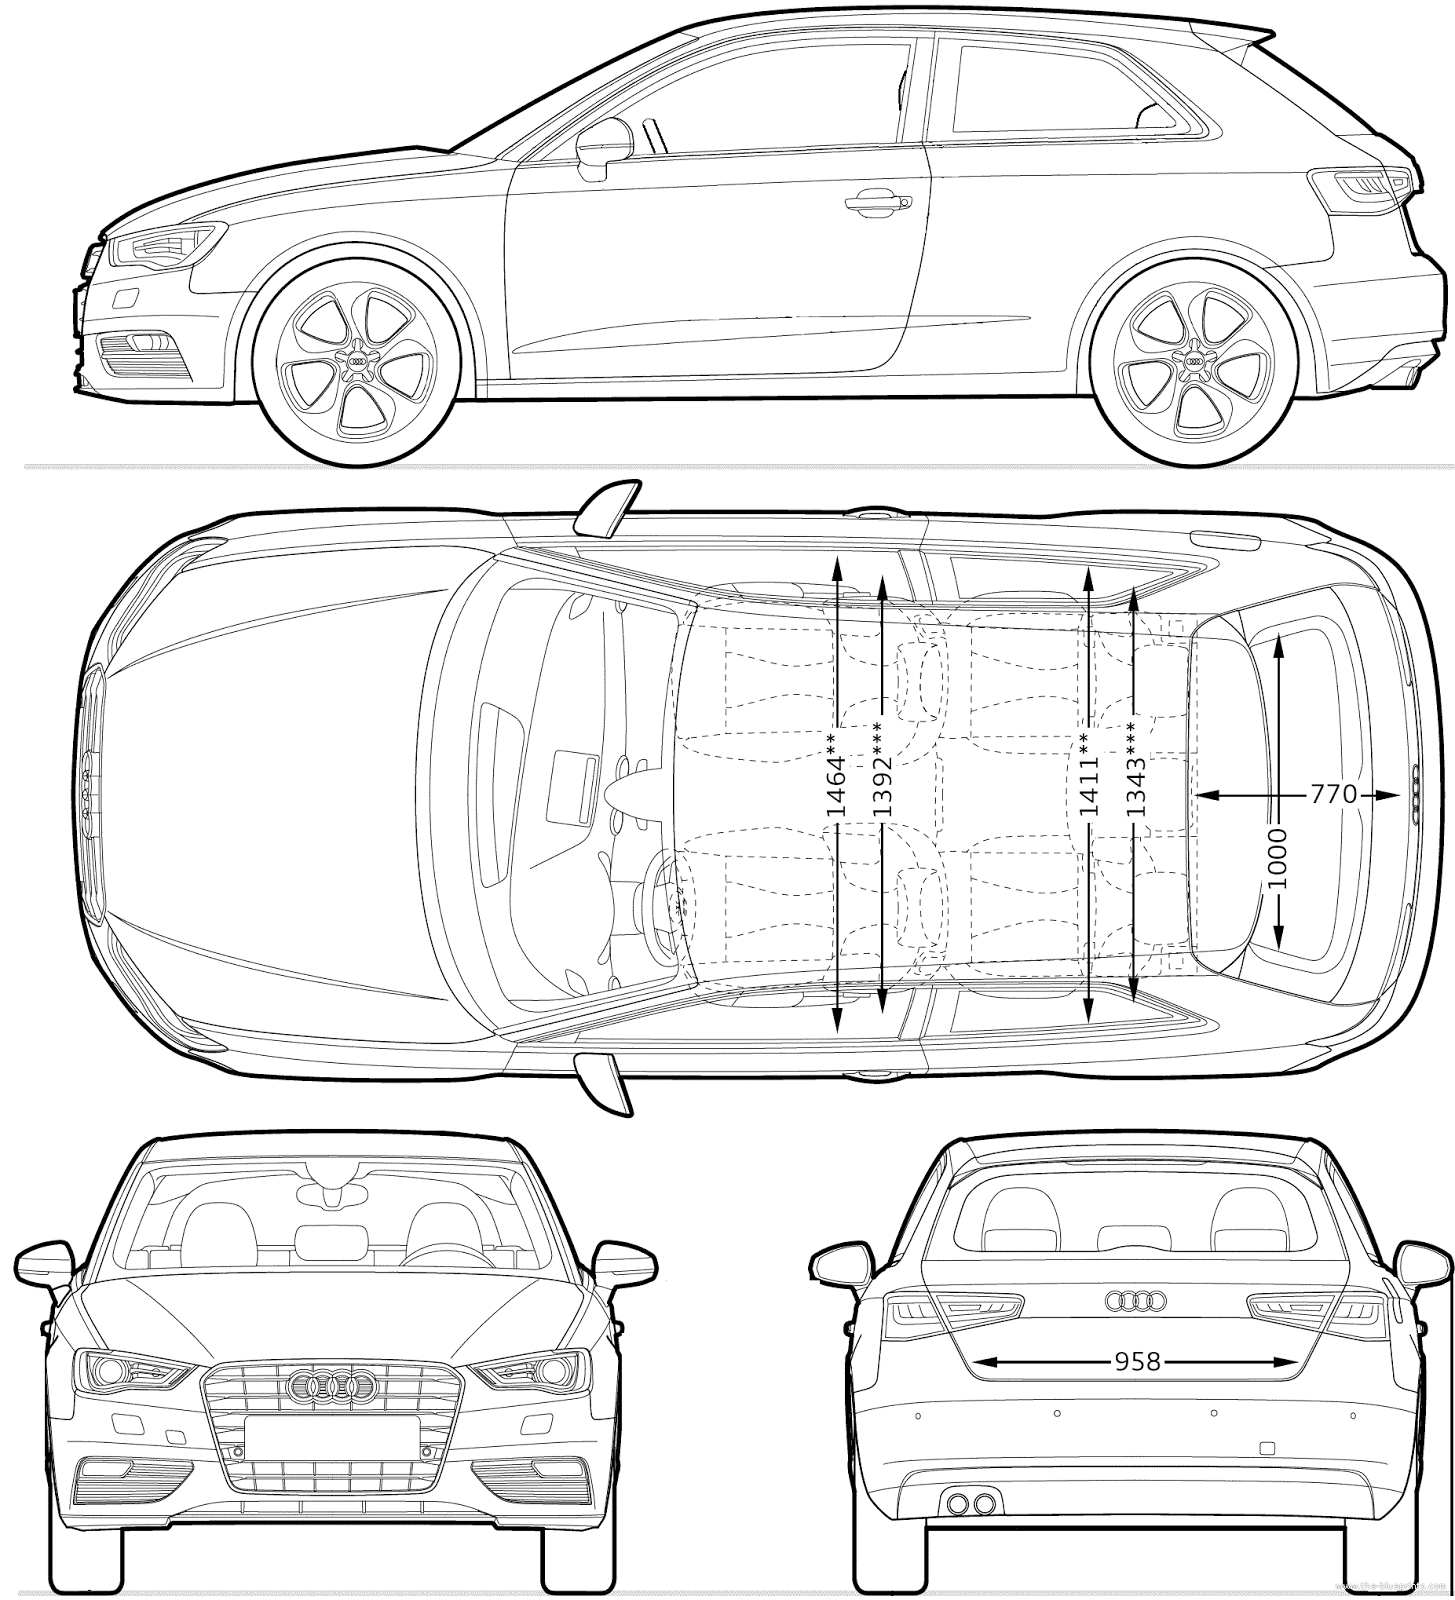 CGfrog Most Loved Car Blueprints for 3D Modeling